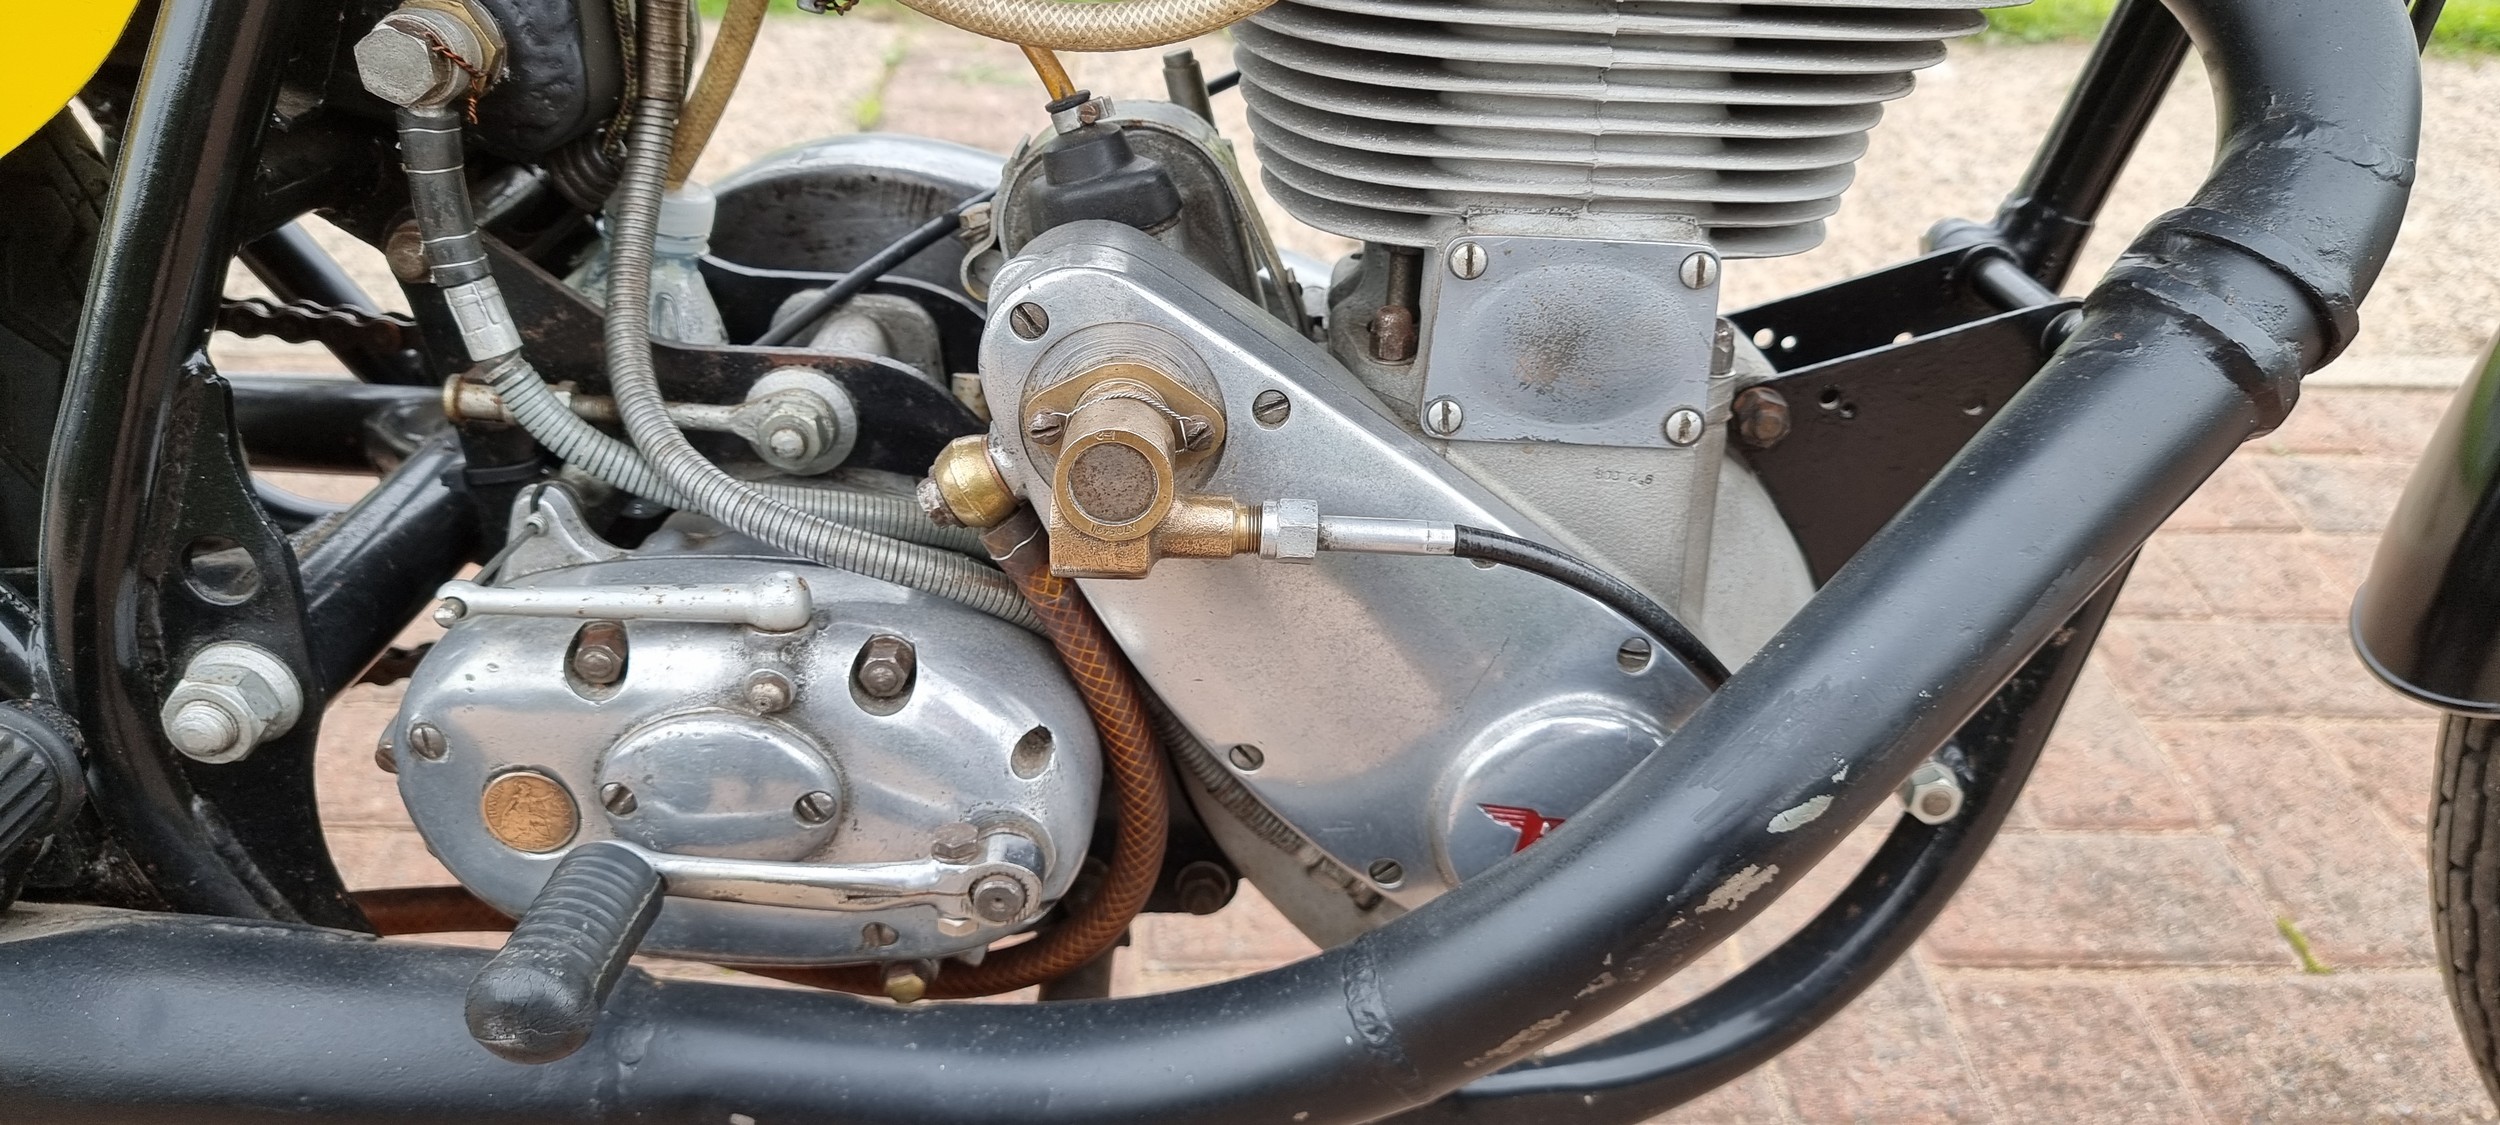 1957 BSA Gold Star DBD34, 499cc, ex Harry Grant race bike. Registration number UUV 183 (non - Image 6 of 16